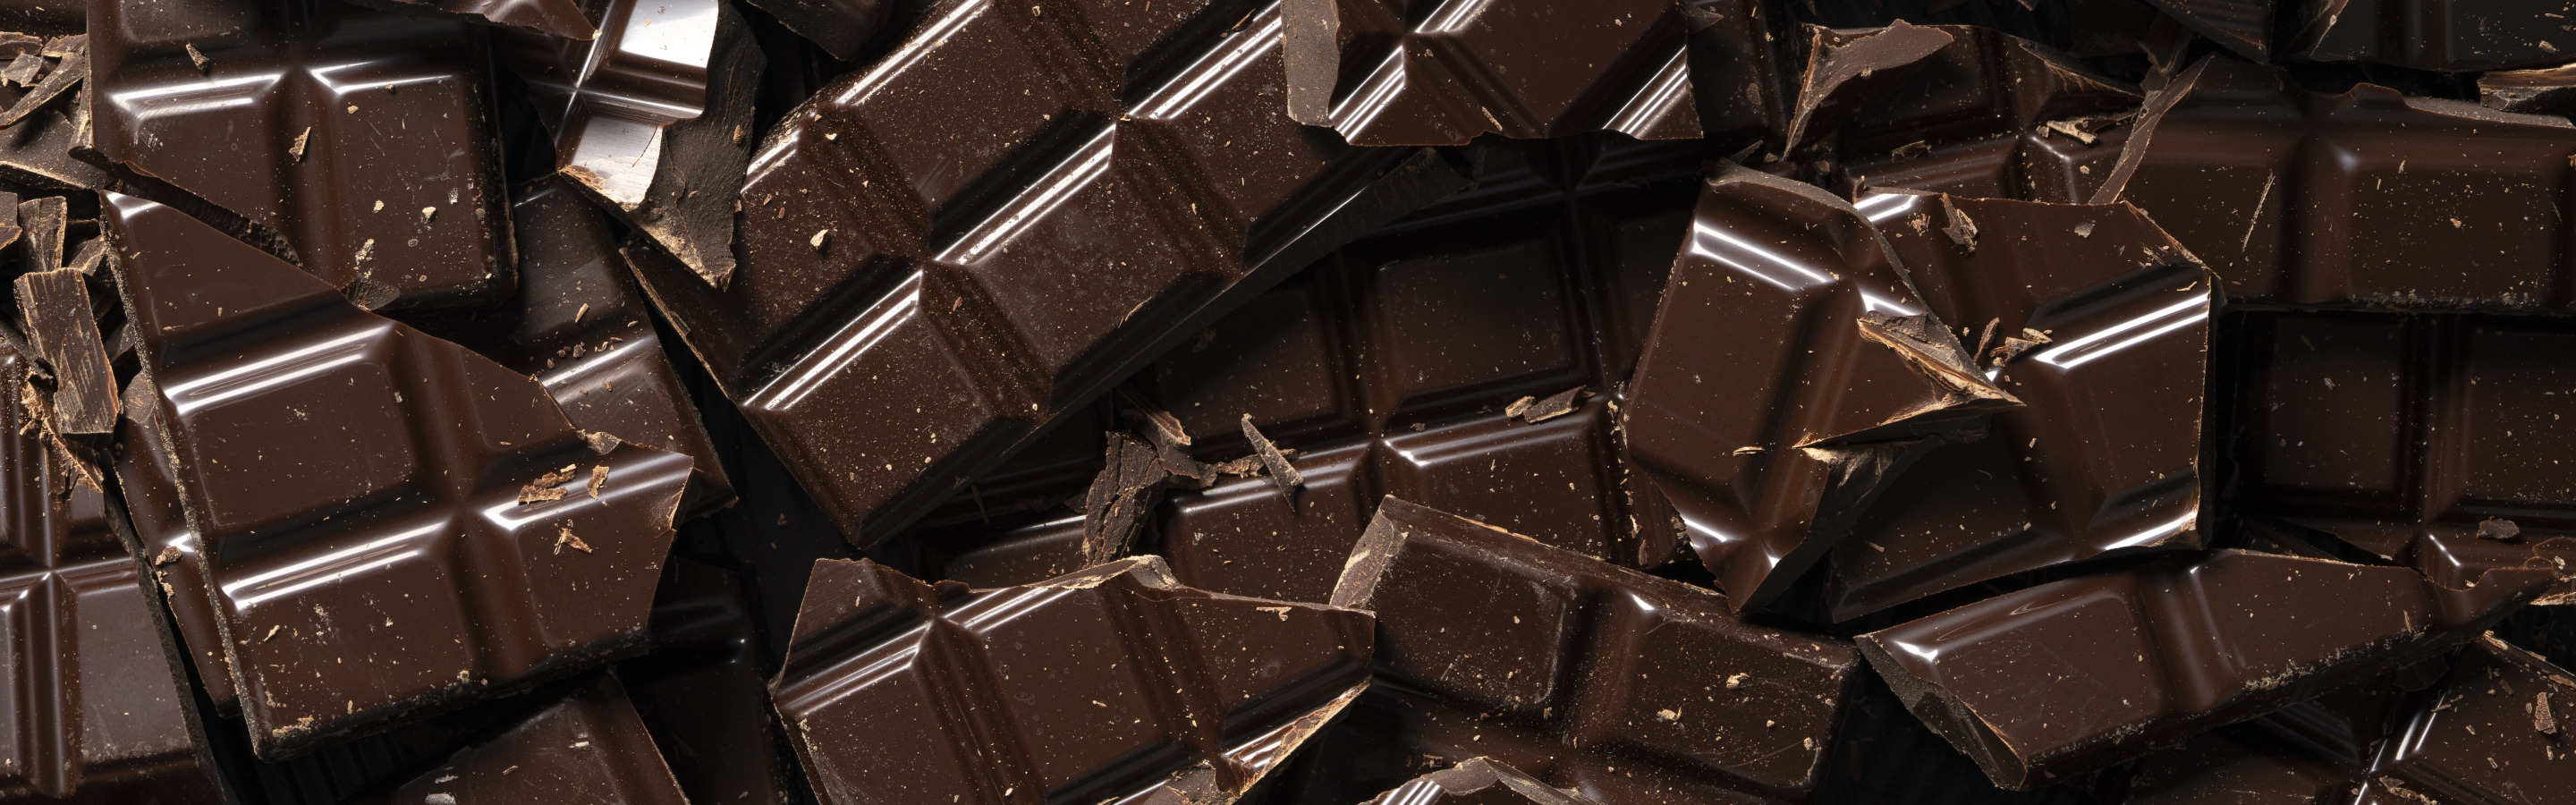 Ломай шоколад. Плитка шоколада. Запах шоколада. Технические шоколадки. Части шоколада.